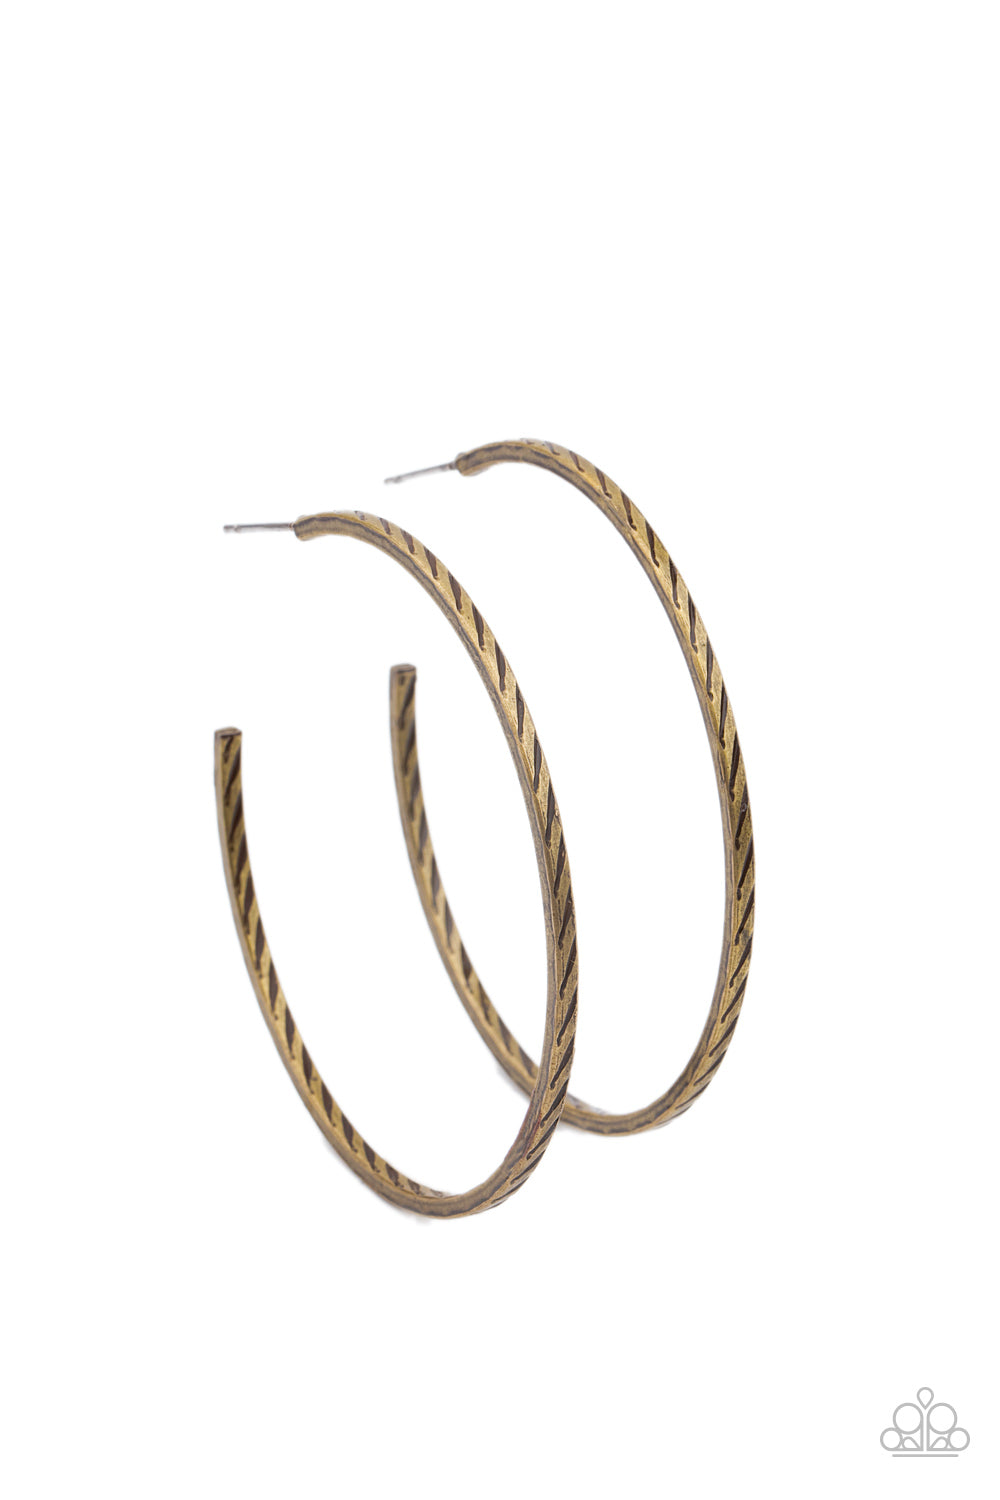 Paparazzi Accessories earrings, brass 2" diameter stylish hoops.